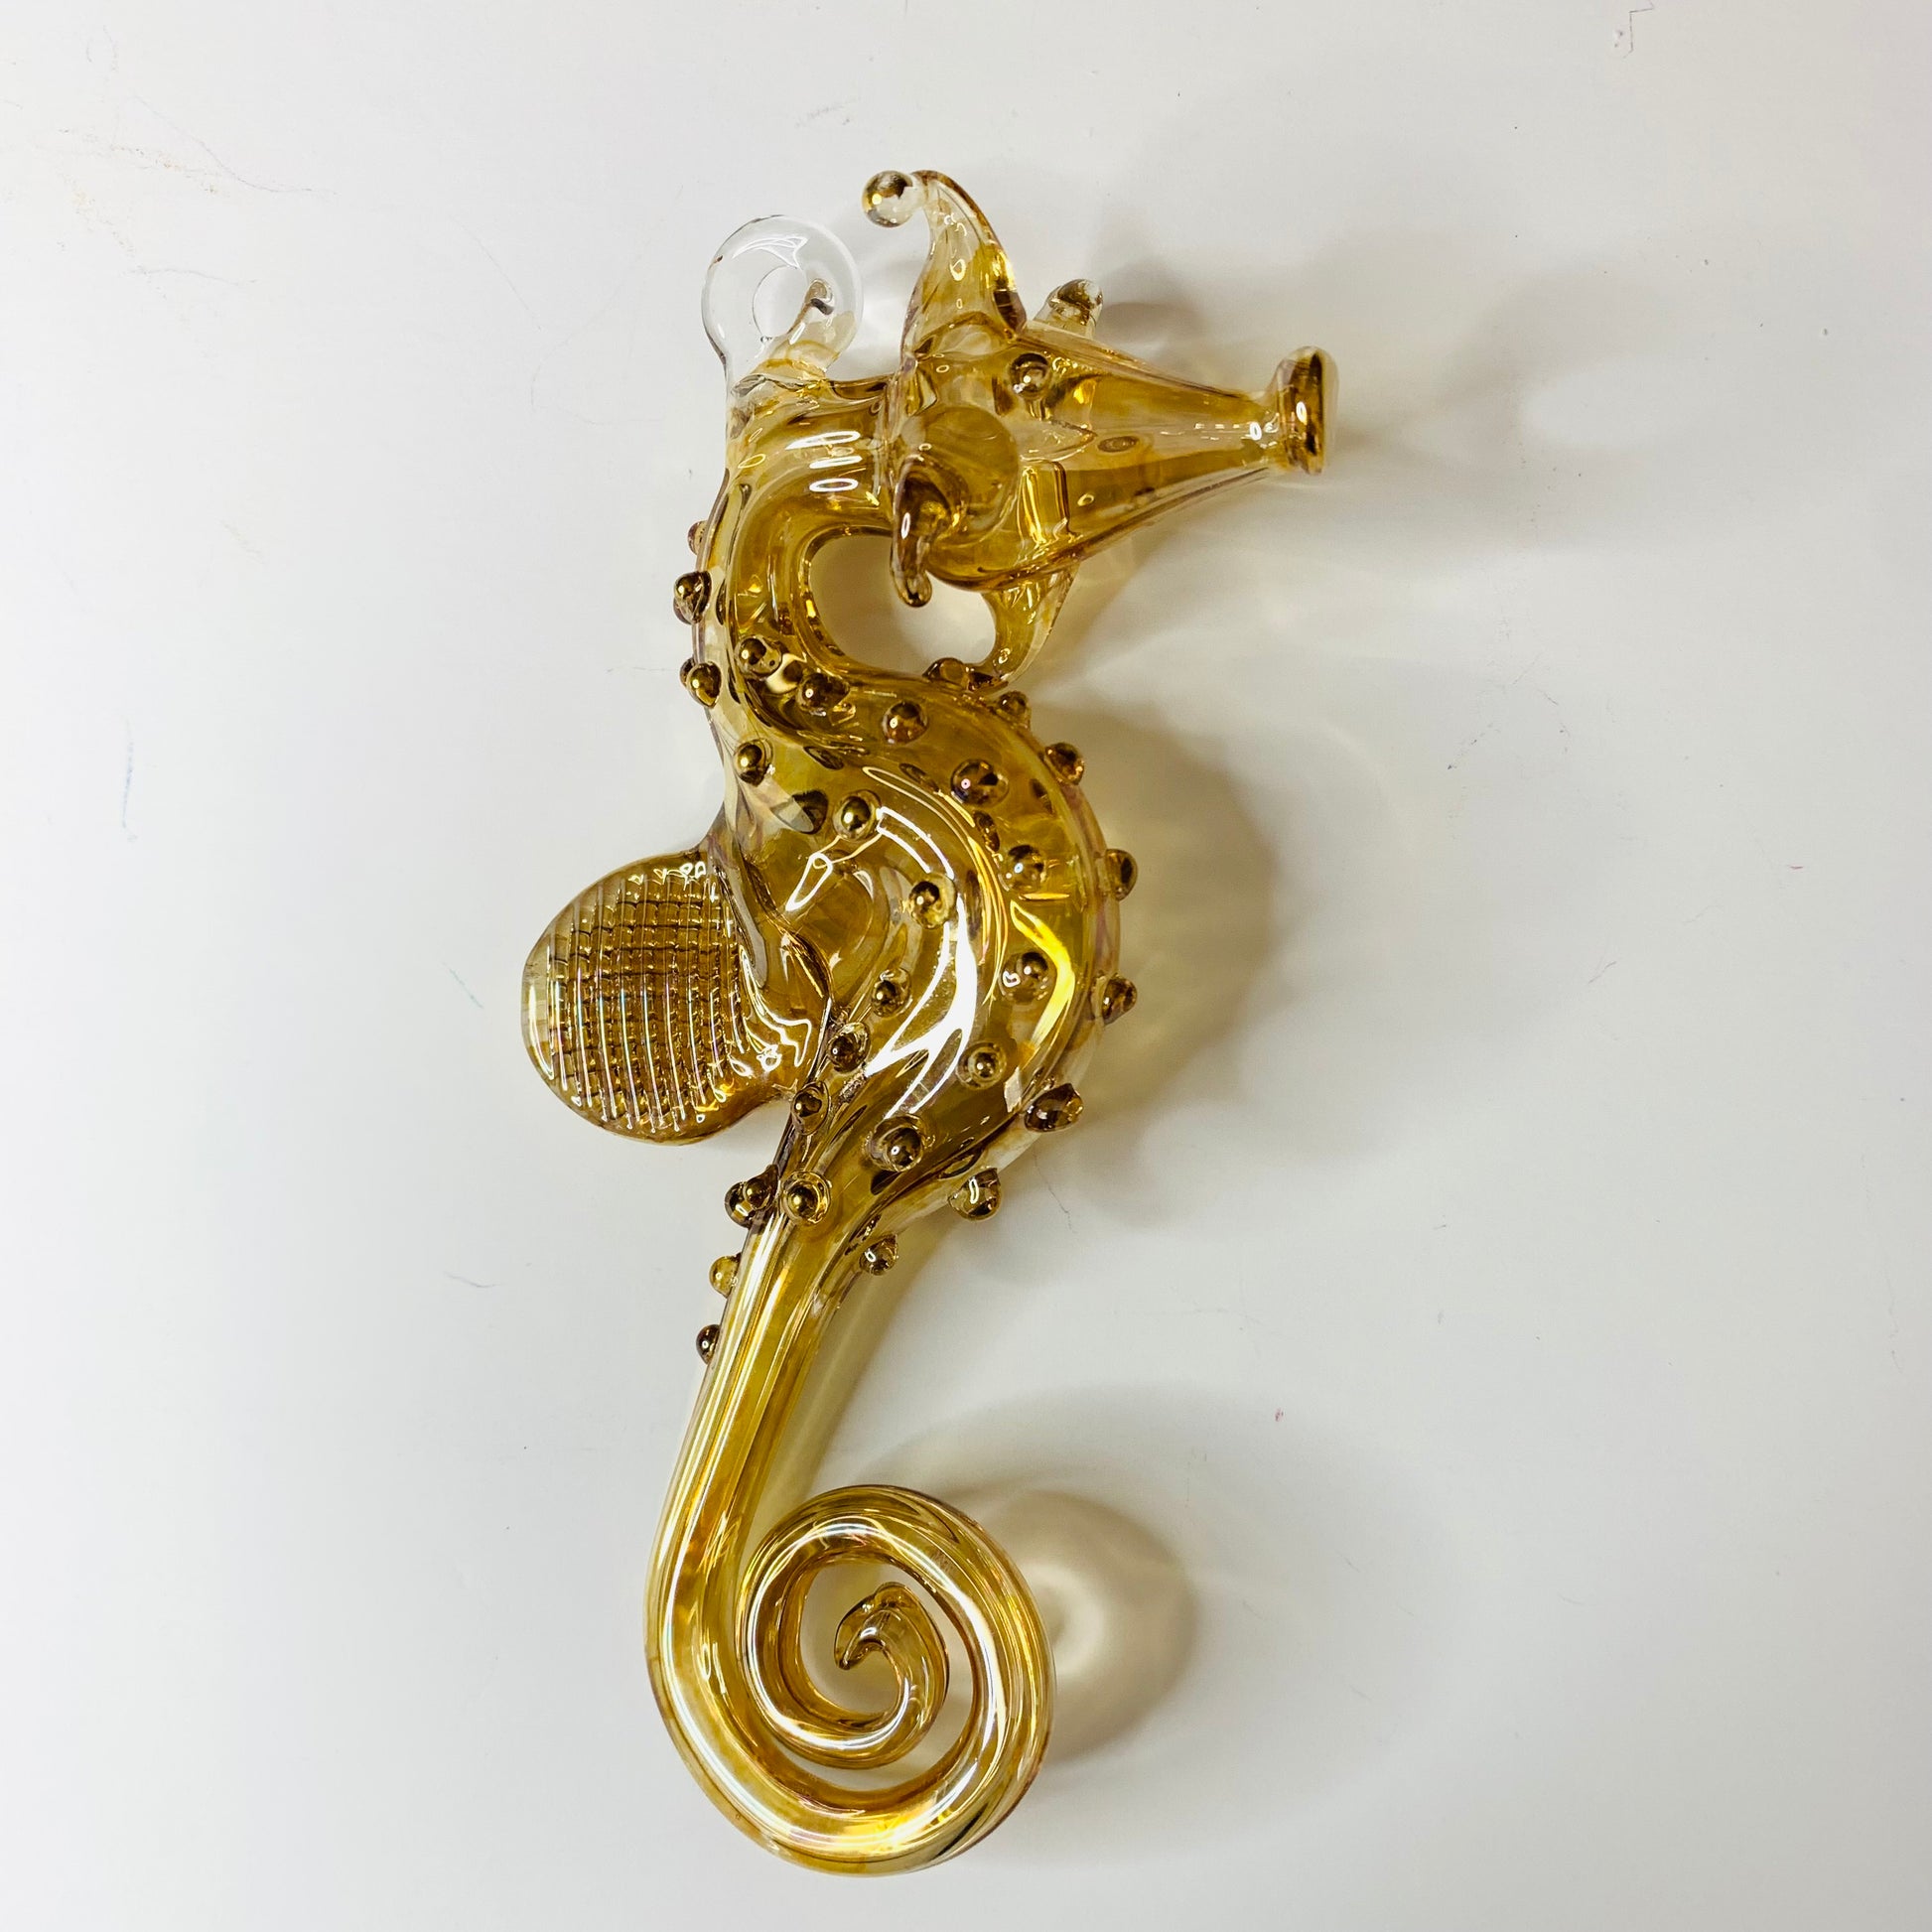 Blown Glass Ornament - Seahorse